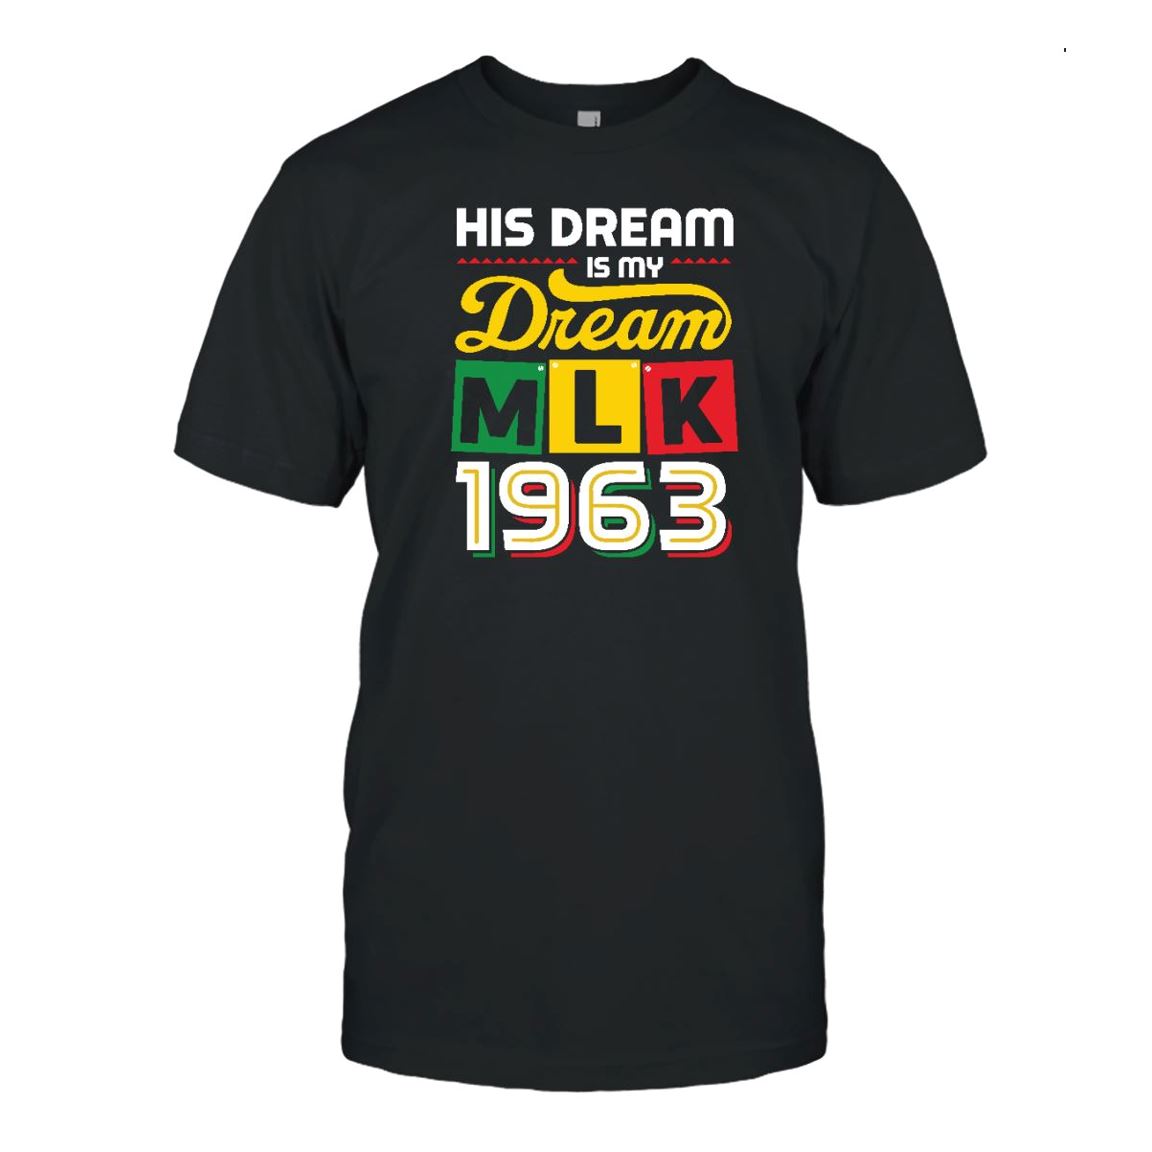 His Dream Is My Dream Shirt Apparel Gearment Unisex T-Shirt Black S